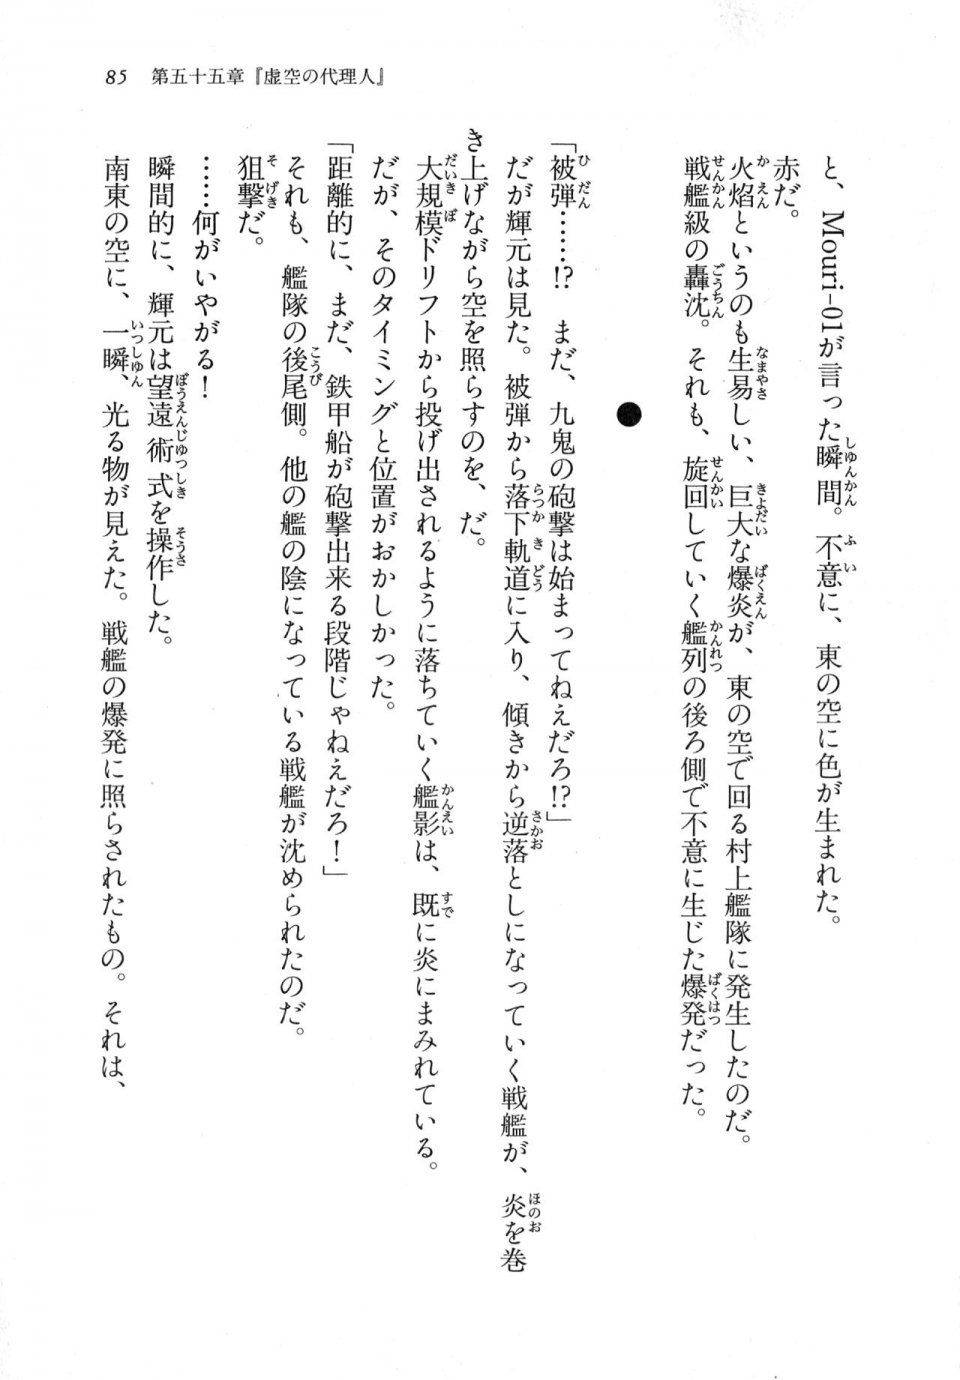 Kyoukai Senjou no Horizon LN Vol 18(7C) Part 1 - Photo #85